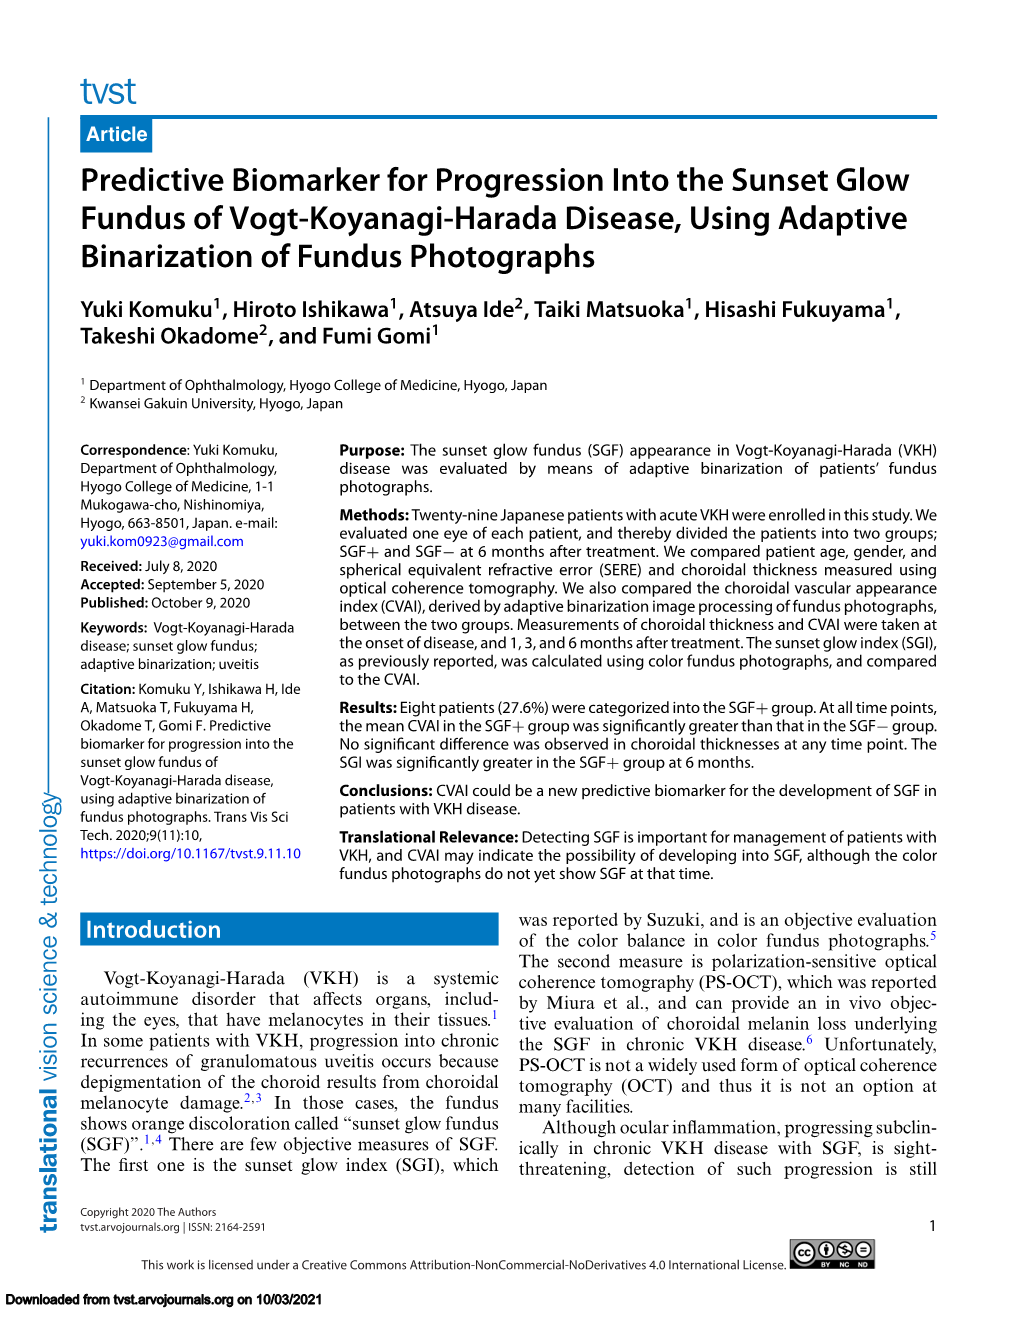 Predictive Biomarker for Progression Into the Sunset Glow Fundus of Vogt-Koyanagi-Harada Disease, Using Adaptive Binarization of Fundus Photographs